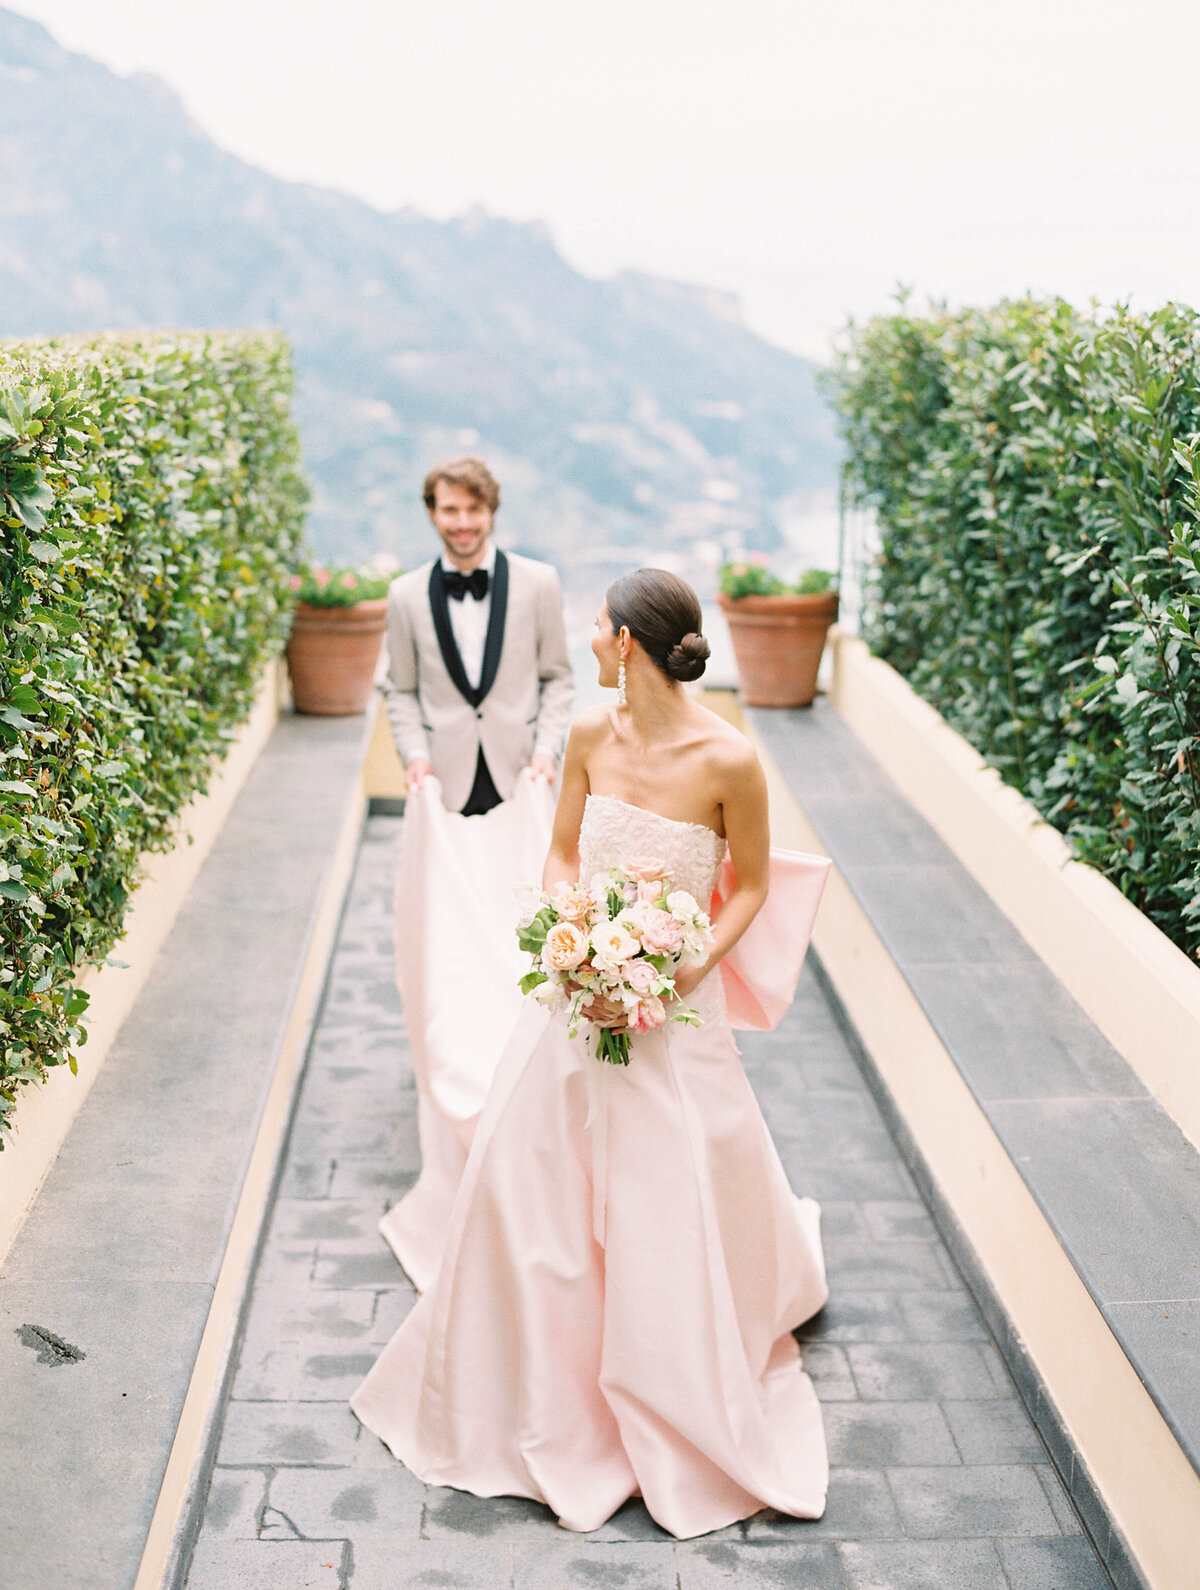 Bride and groom at Belmond Hotel Caruso destination wedding in Ravello Amalfi Coast Italy